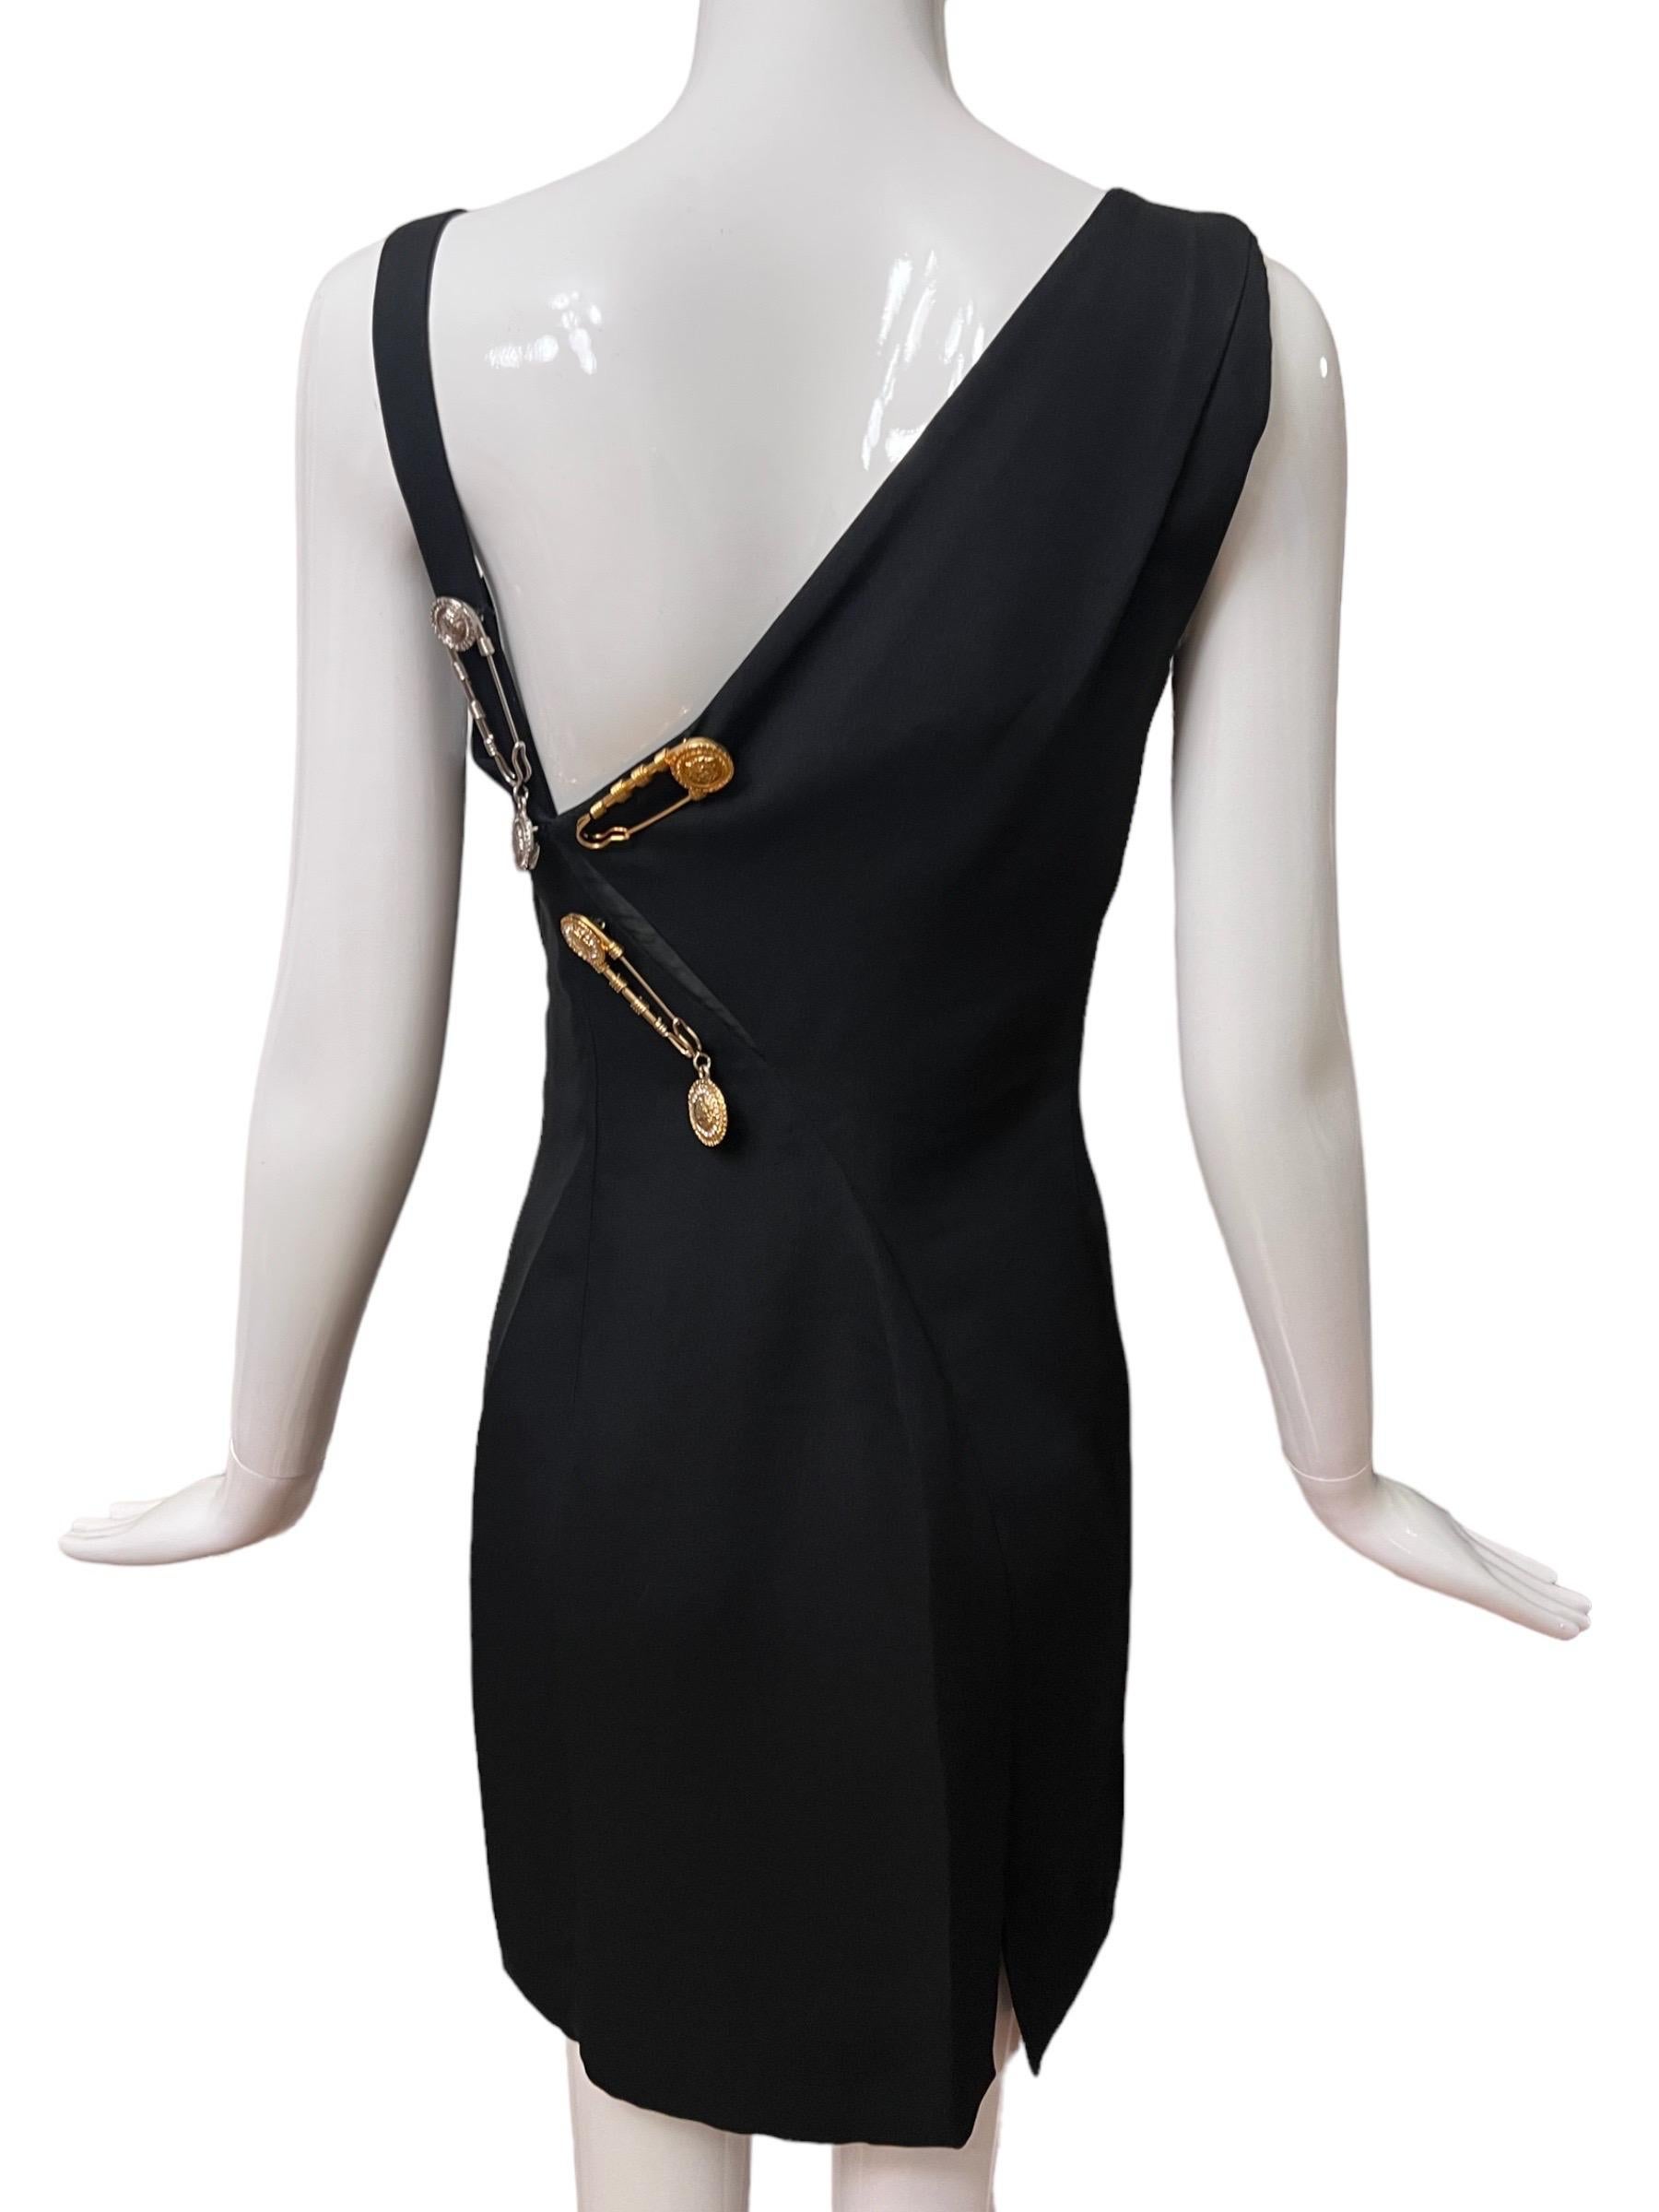 S/S 1994 Gianni Versace Safety Pin Medusa Embellished Black Mini Dress For Sale 1